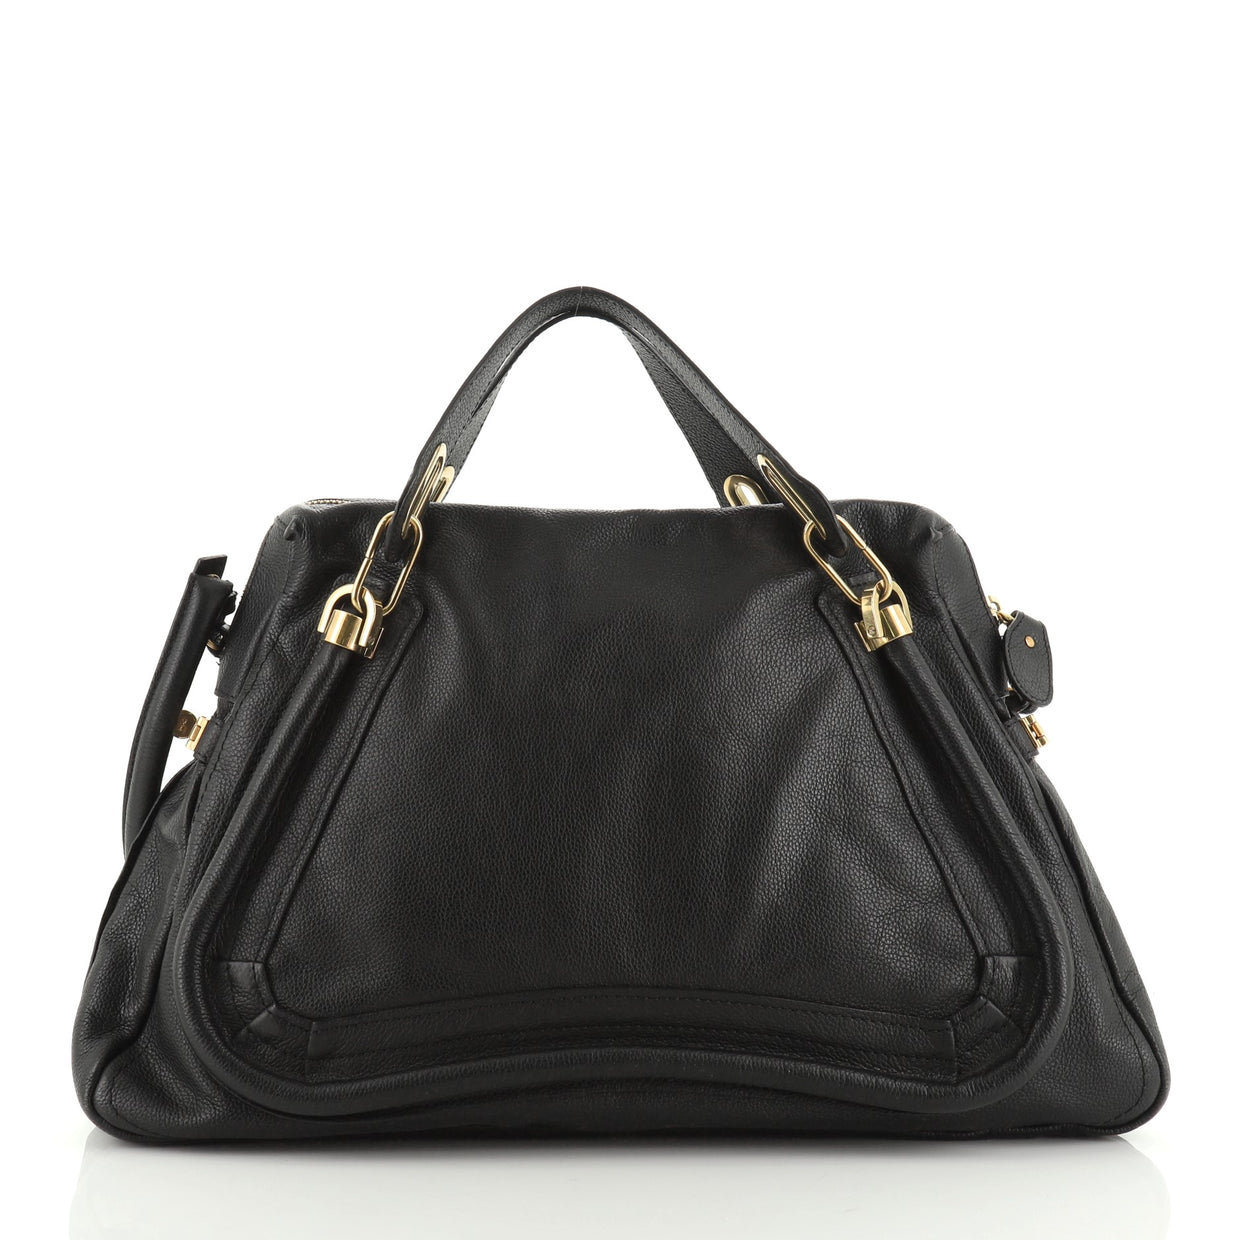 Chloe Paraty Top Handle Bag Leather Large Black 4766178